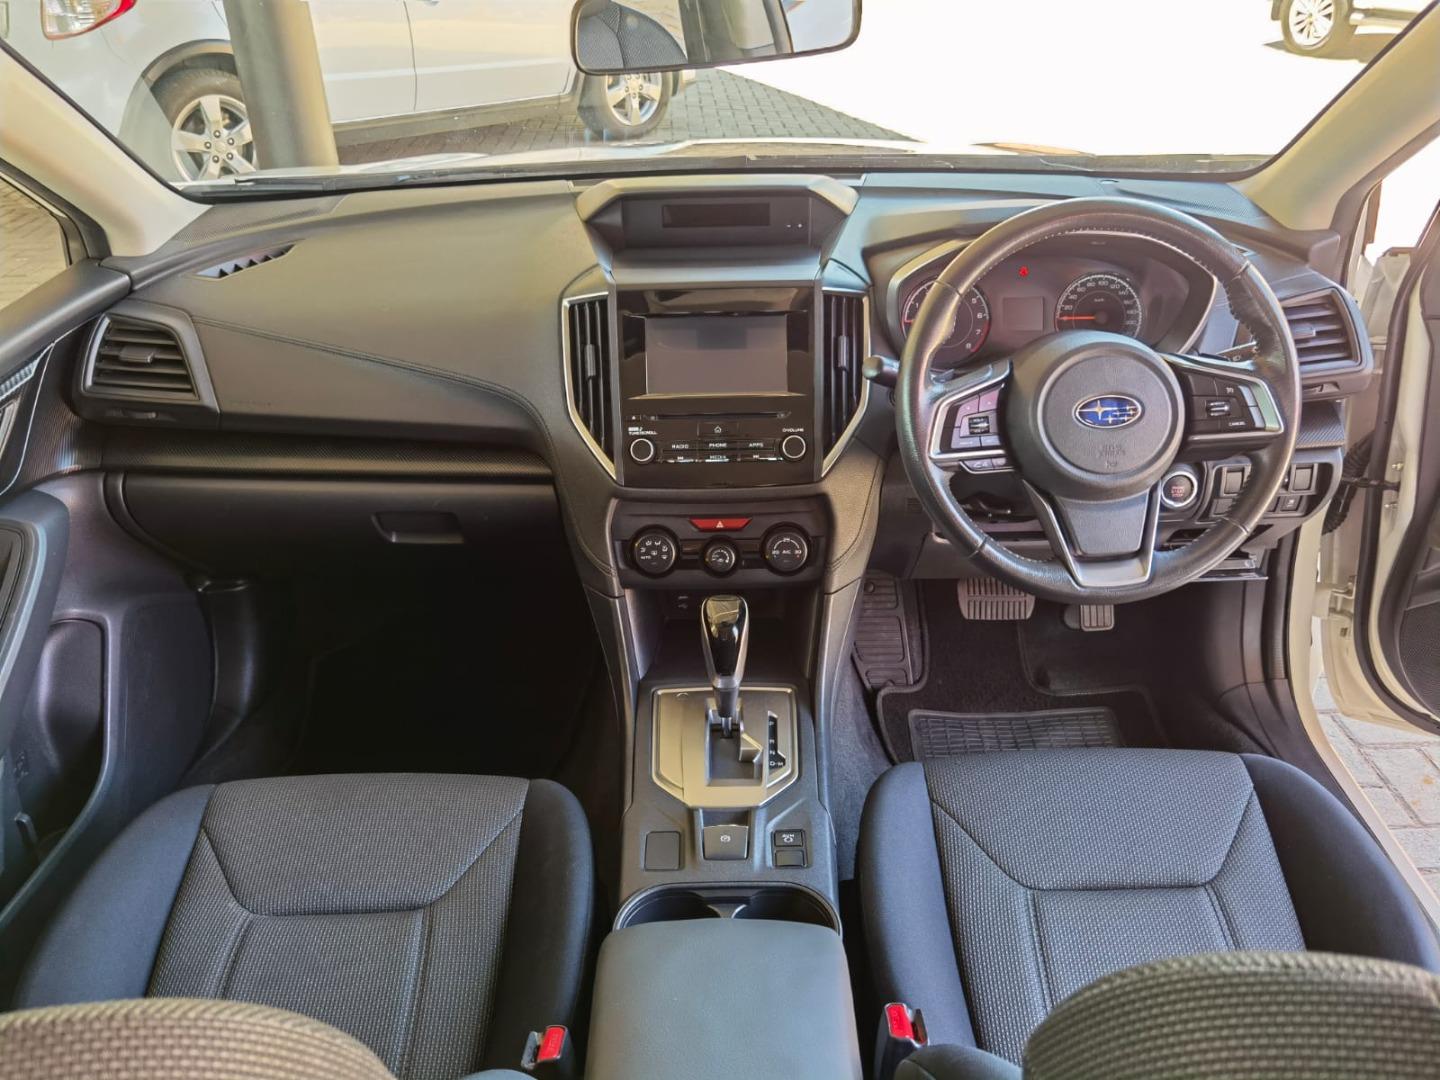 2019 Subaru Impreza steering wheel & gear shift